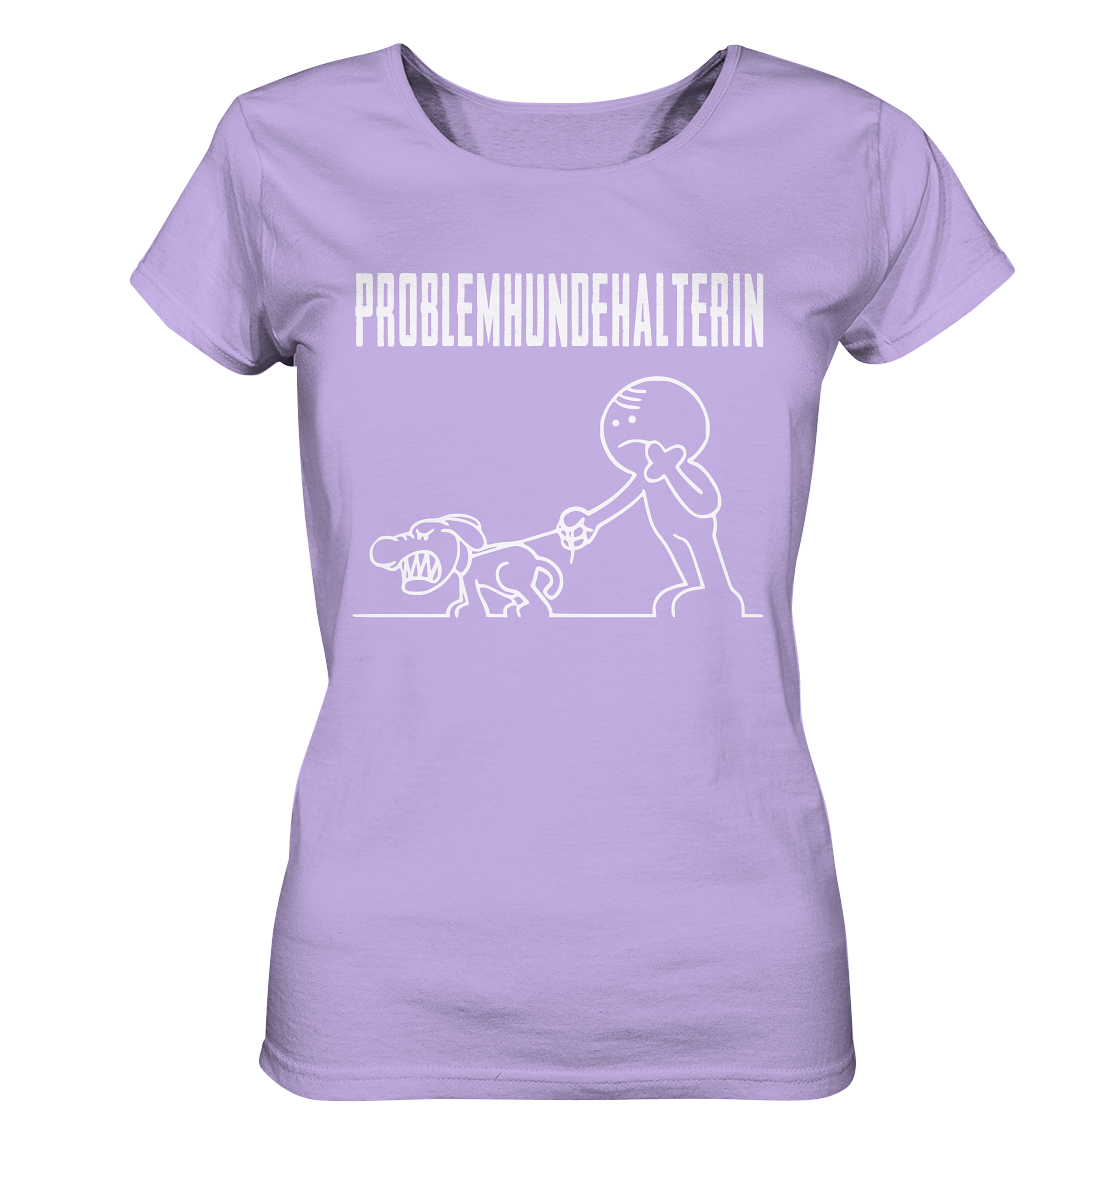 Problemhundehalterin - Ladies Organic Shirt